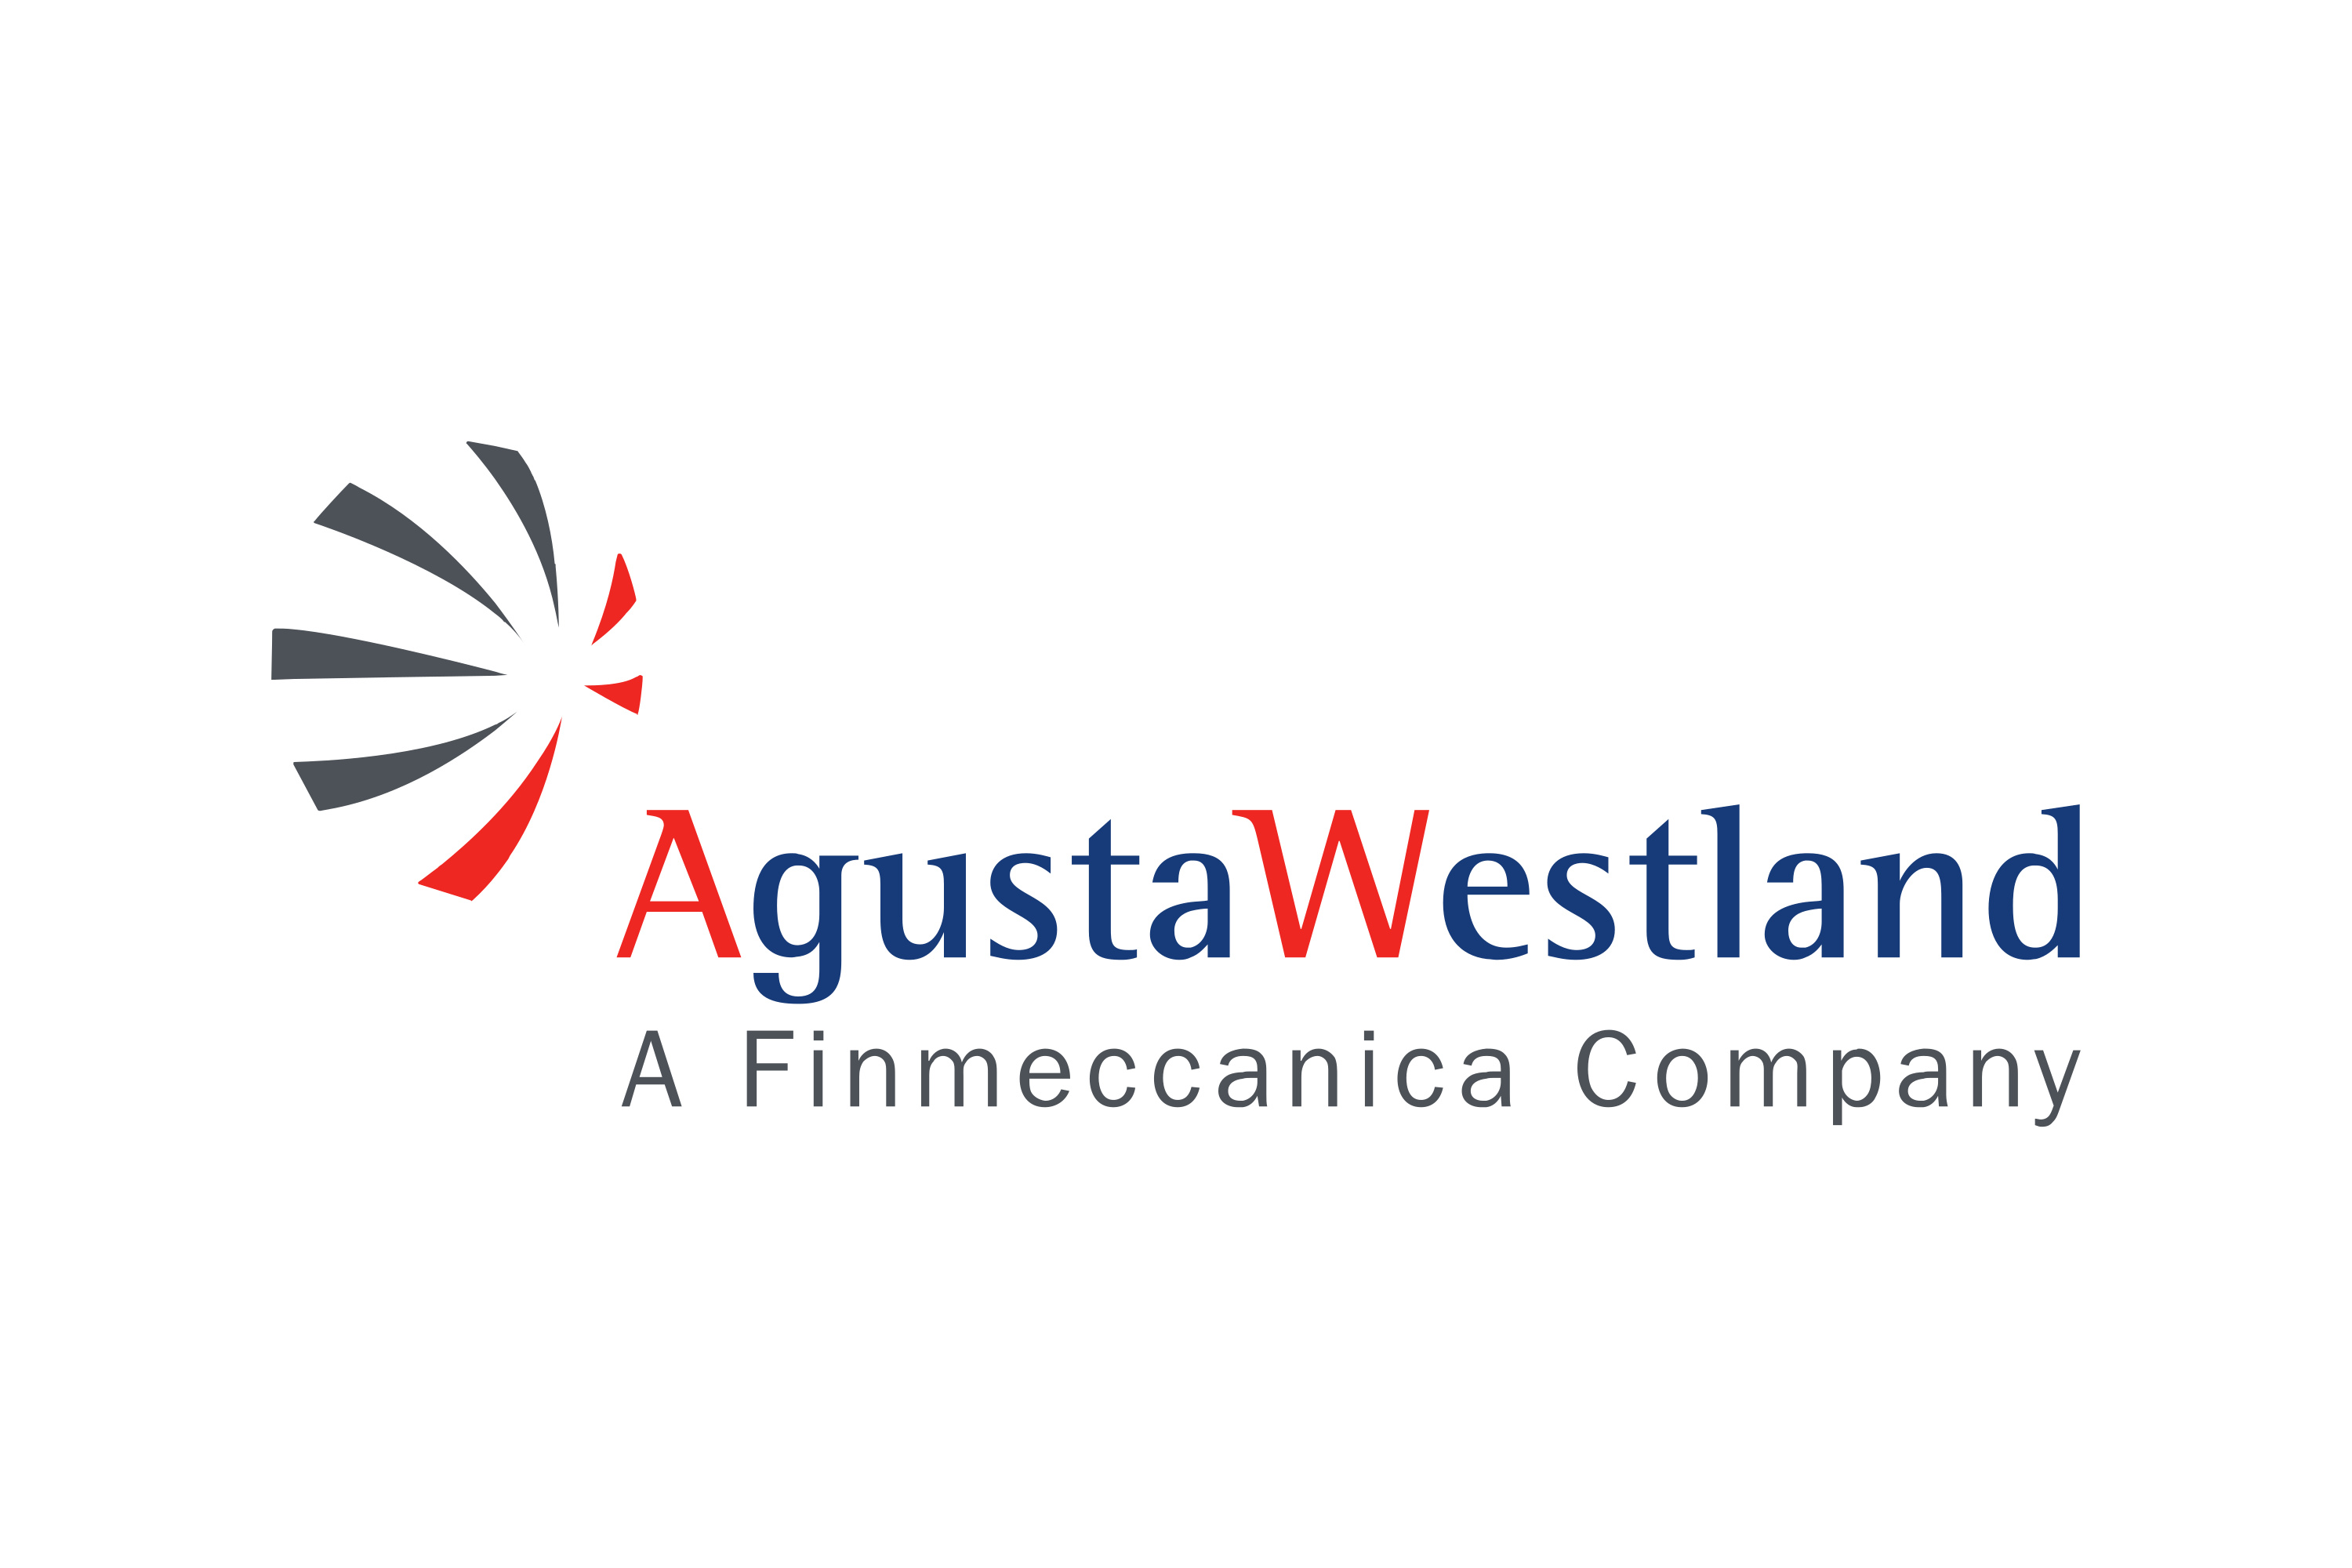 Download AgustaWestland Logo in SVG Vector or PNG File Format 3000x2000